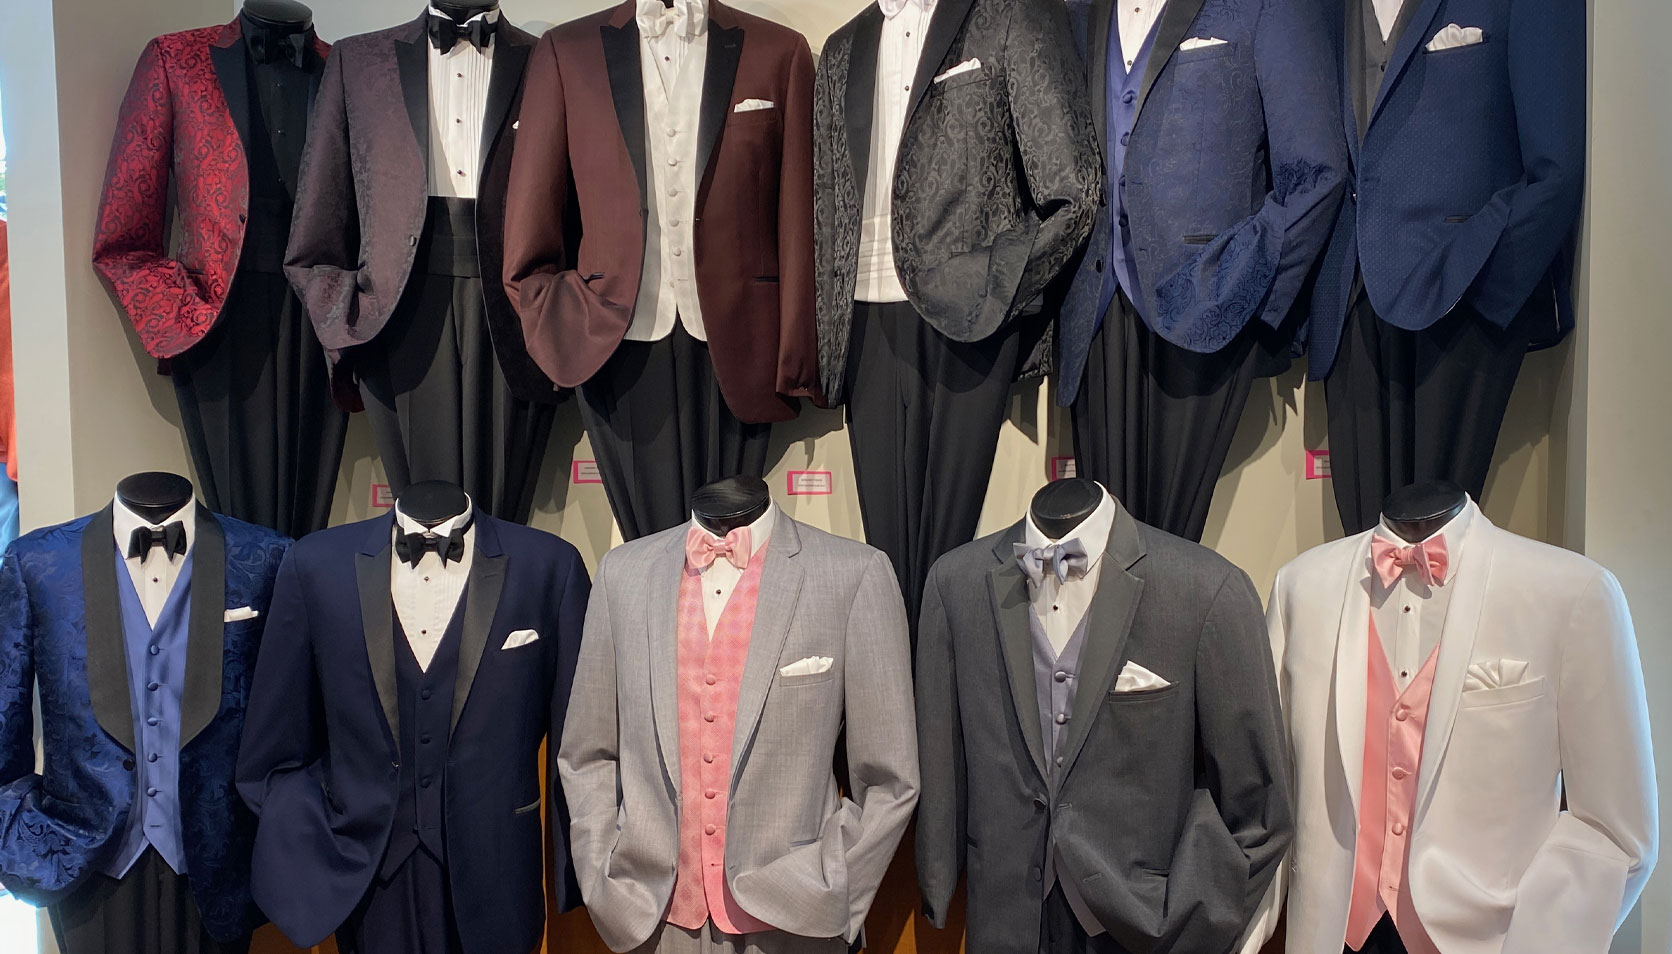 Suits & Tuxedos Philadelphia, PA